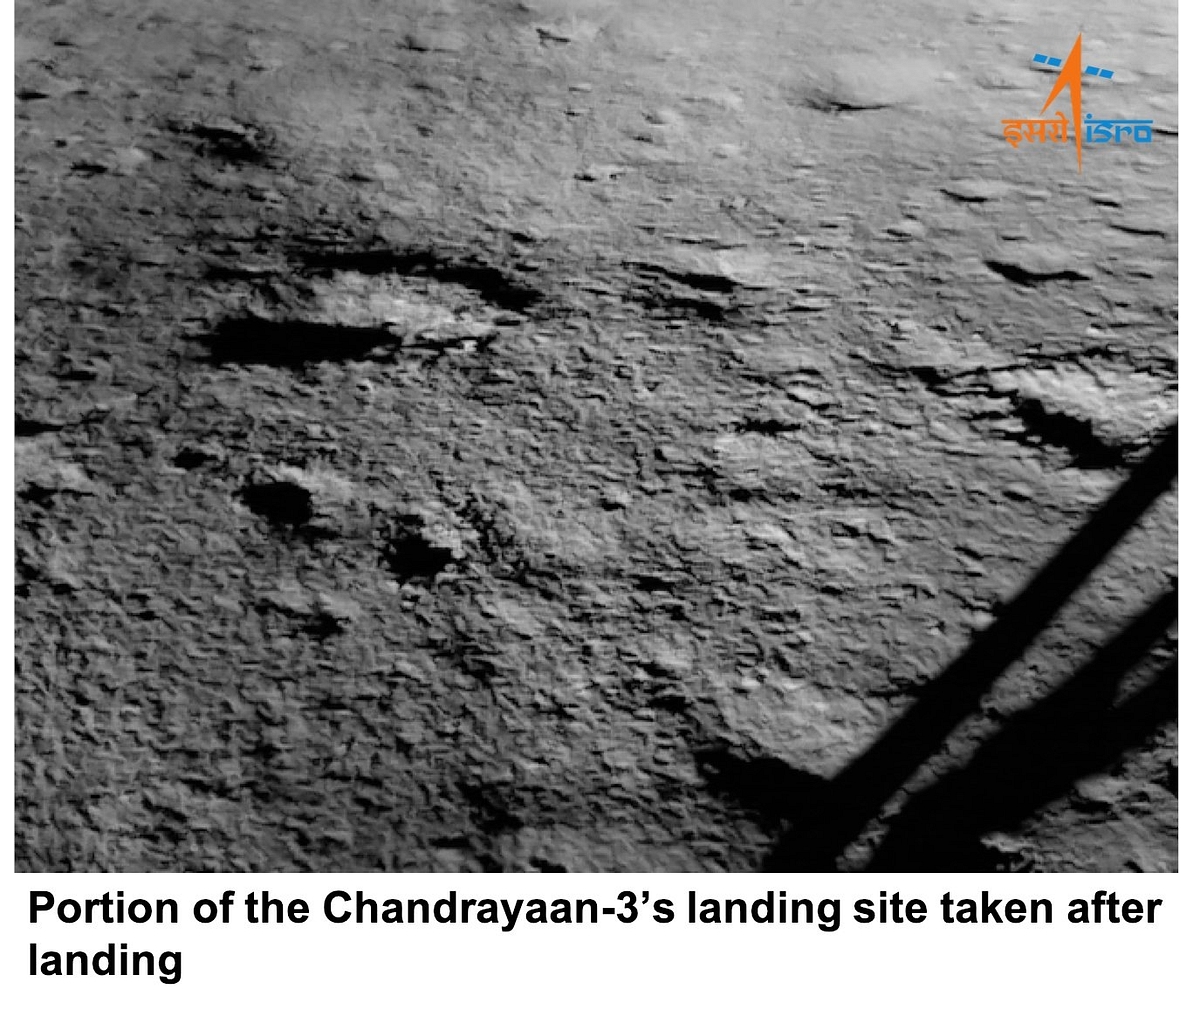 Chandrayaan-3 landing site imaged by the Vikram lander